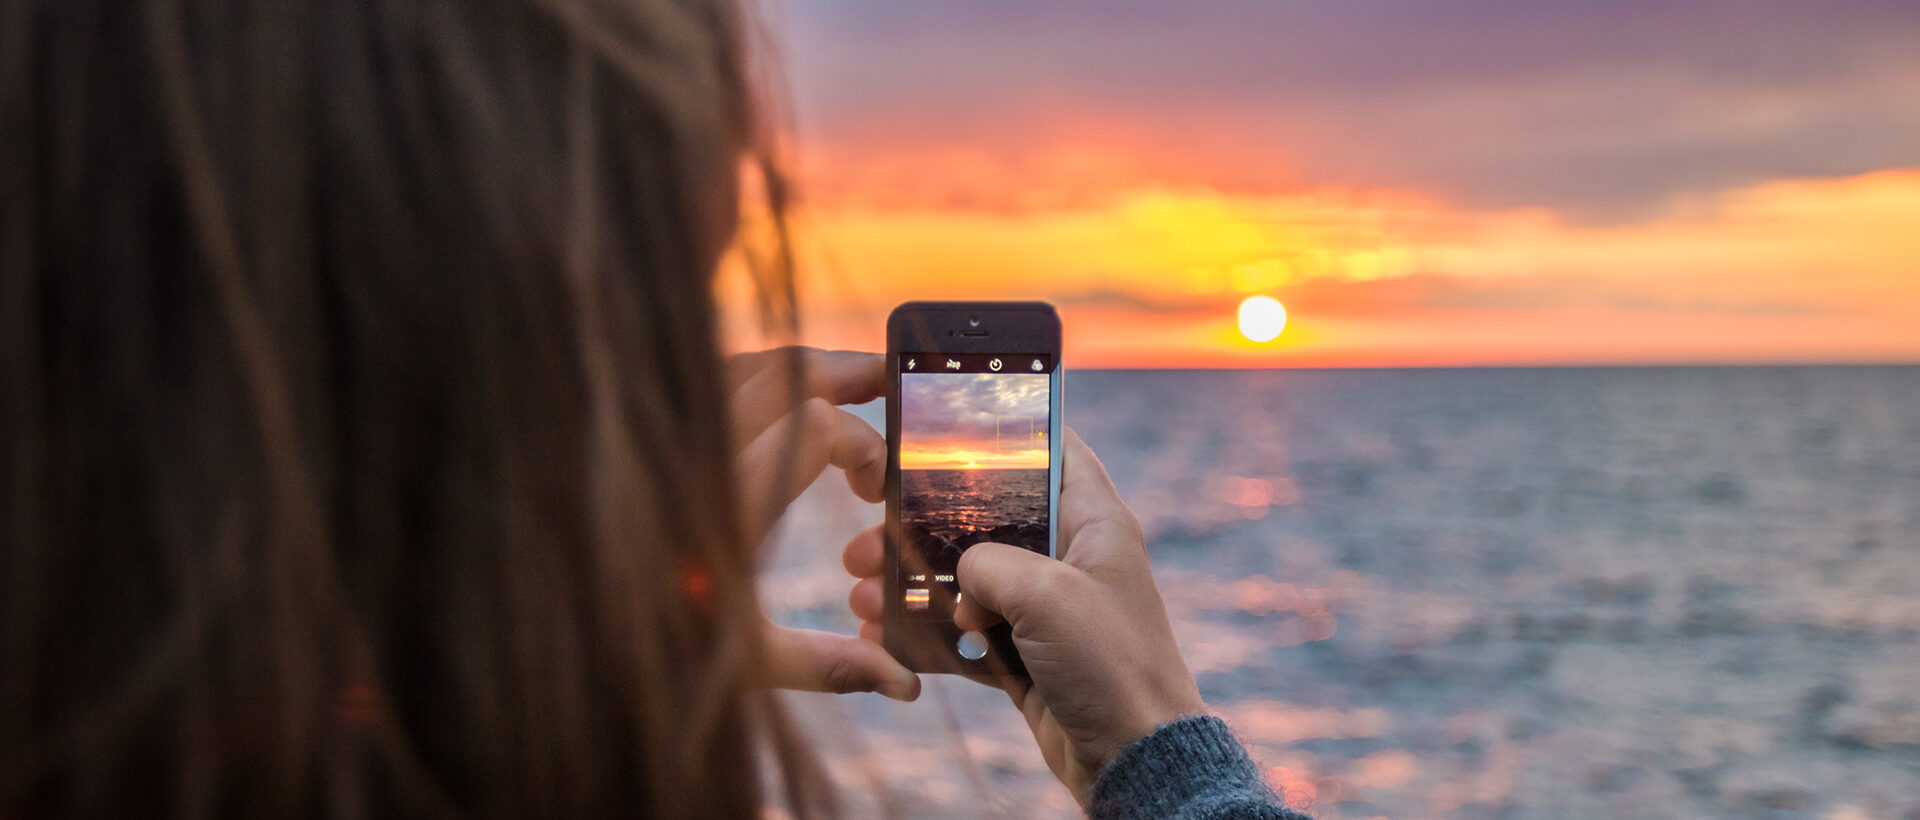 Junge Frau nimmt Foto des Sonnenuntergangs auf für Social Media.